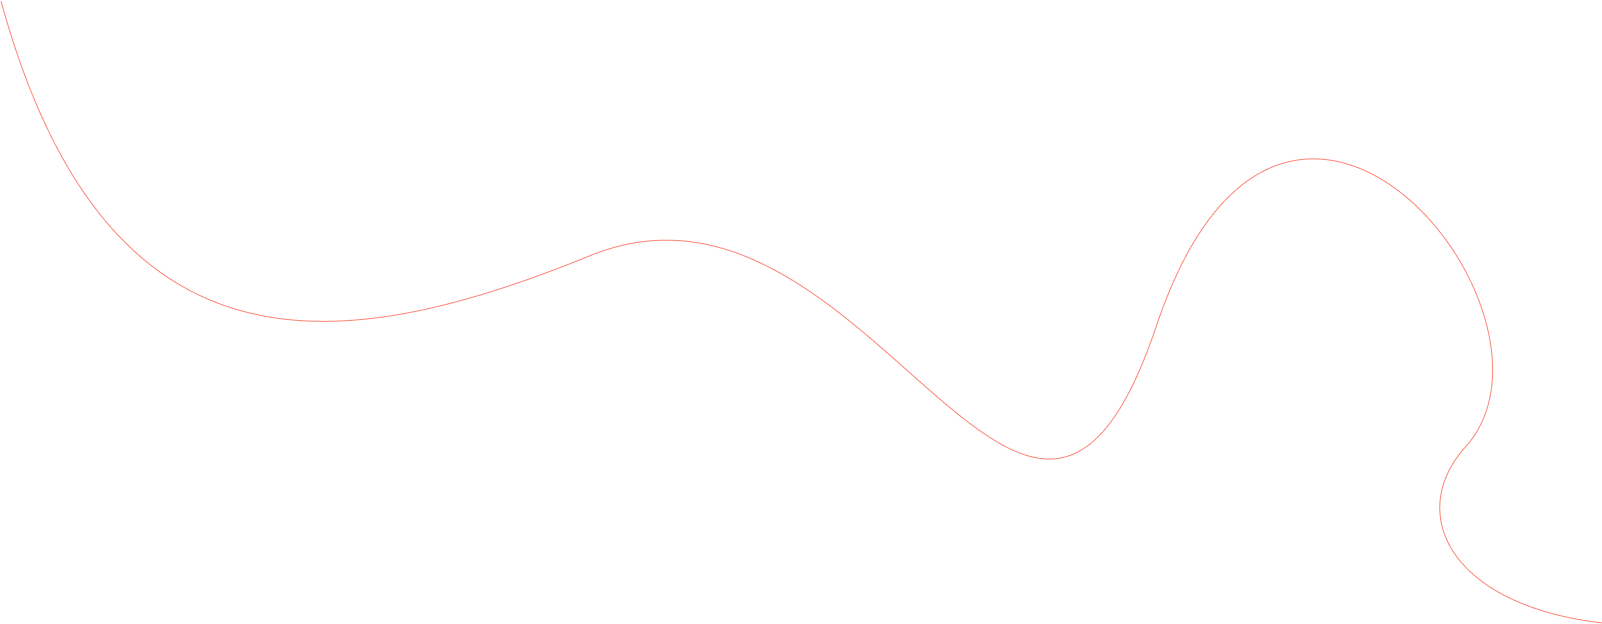 curve line